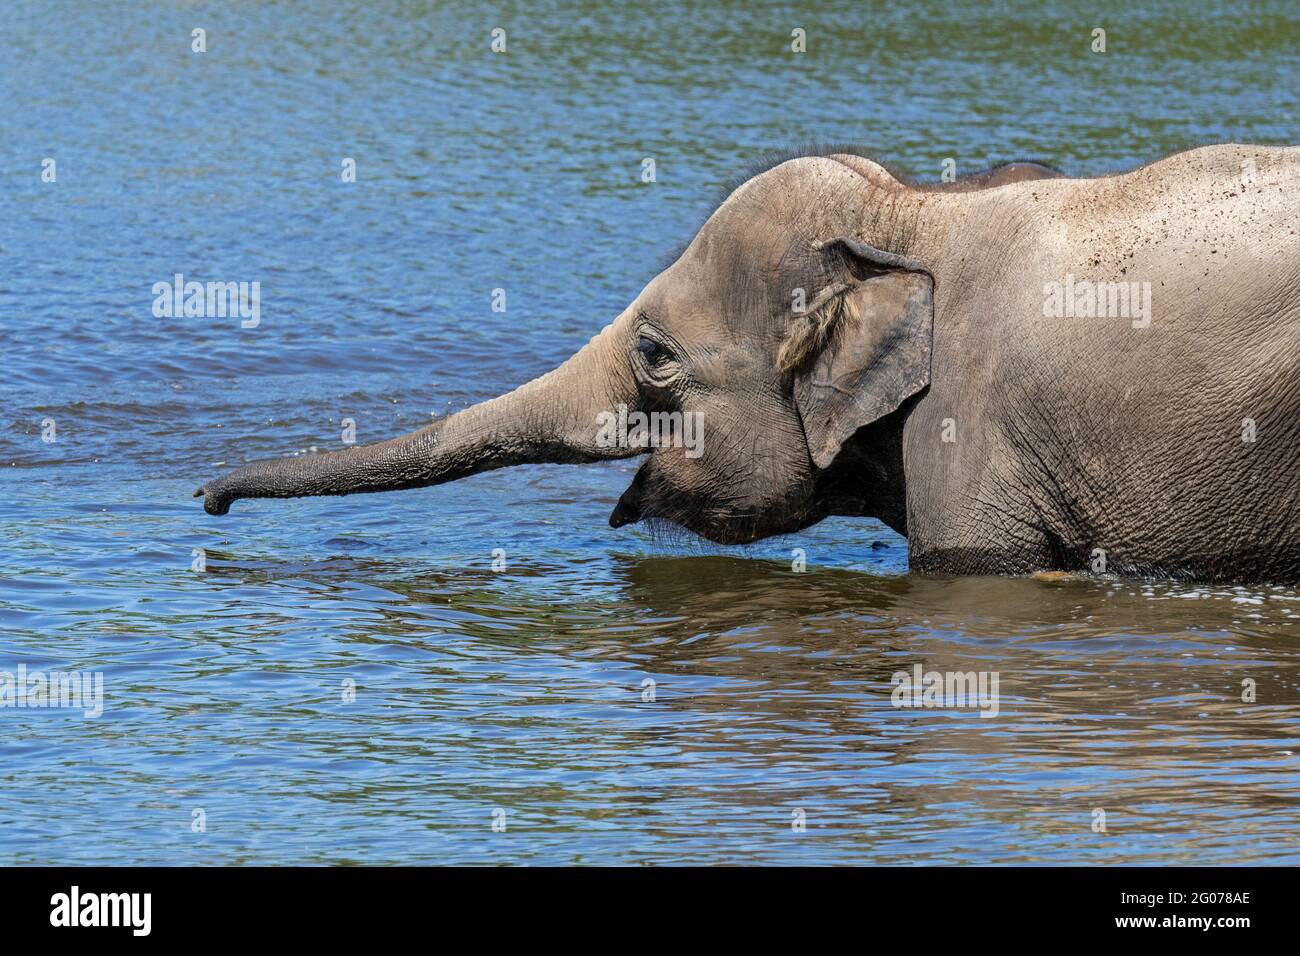 Young Asian elephant / Asiatic elephant juvenile (Elephas maximus) bathing in river Stock Photo